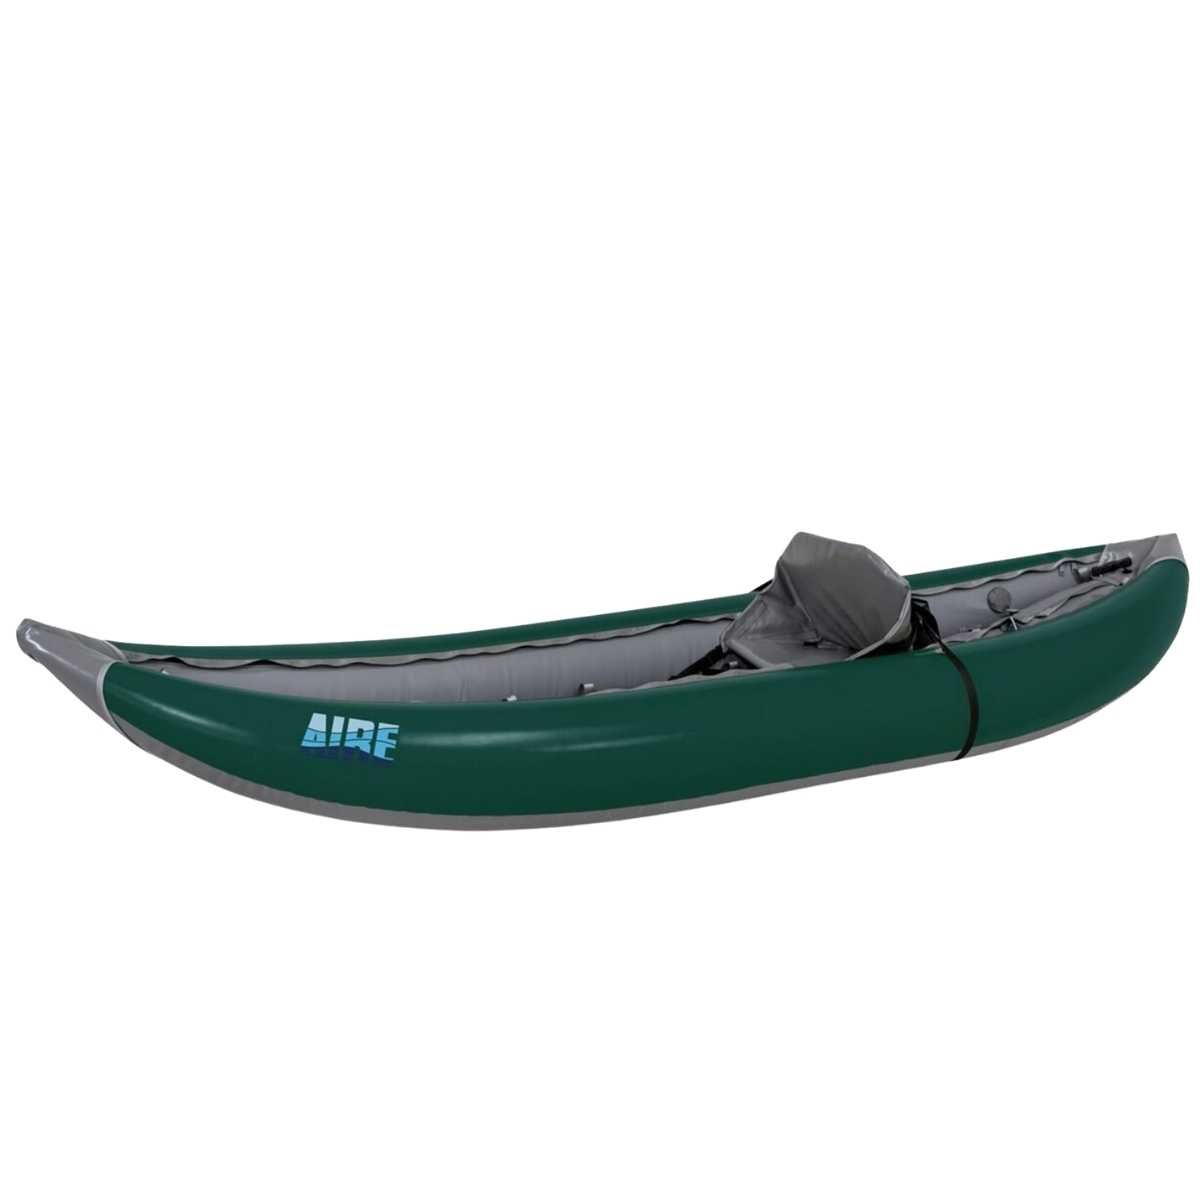 Portable PVC Green Kayak Inflatable Seat Cushion Outdoor Water Sports Tool UK 